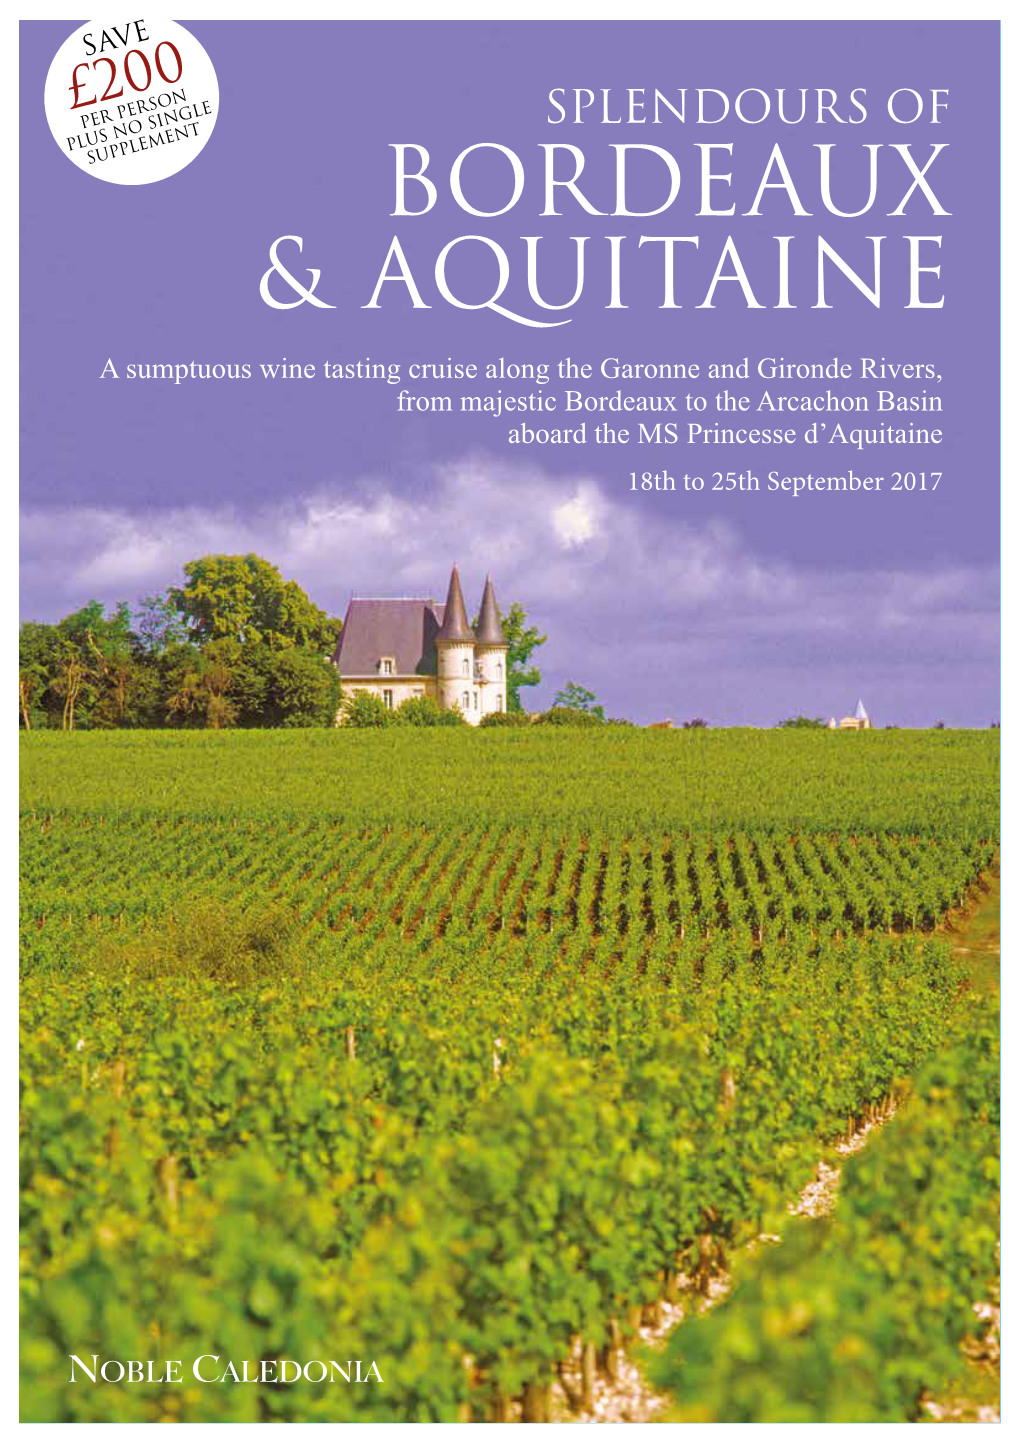 Bordeaux & Aquitaine